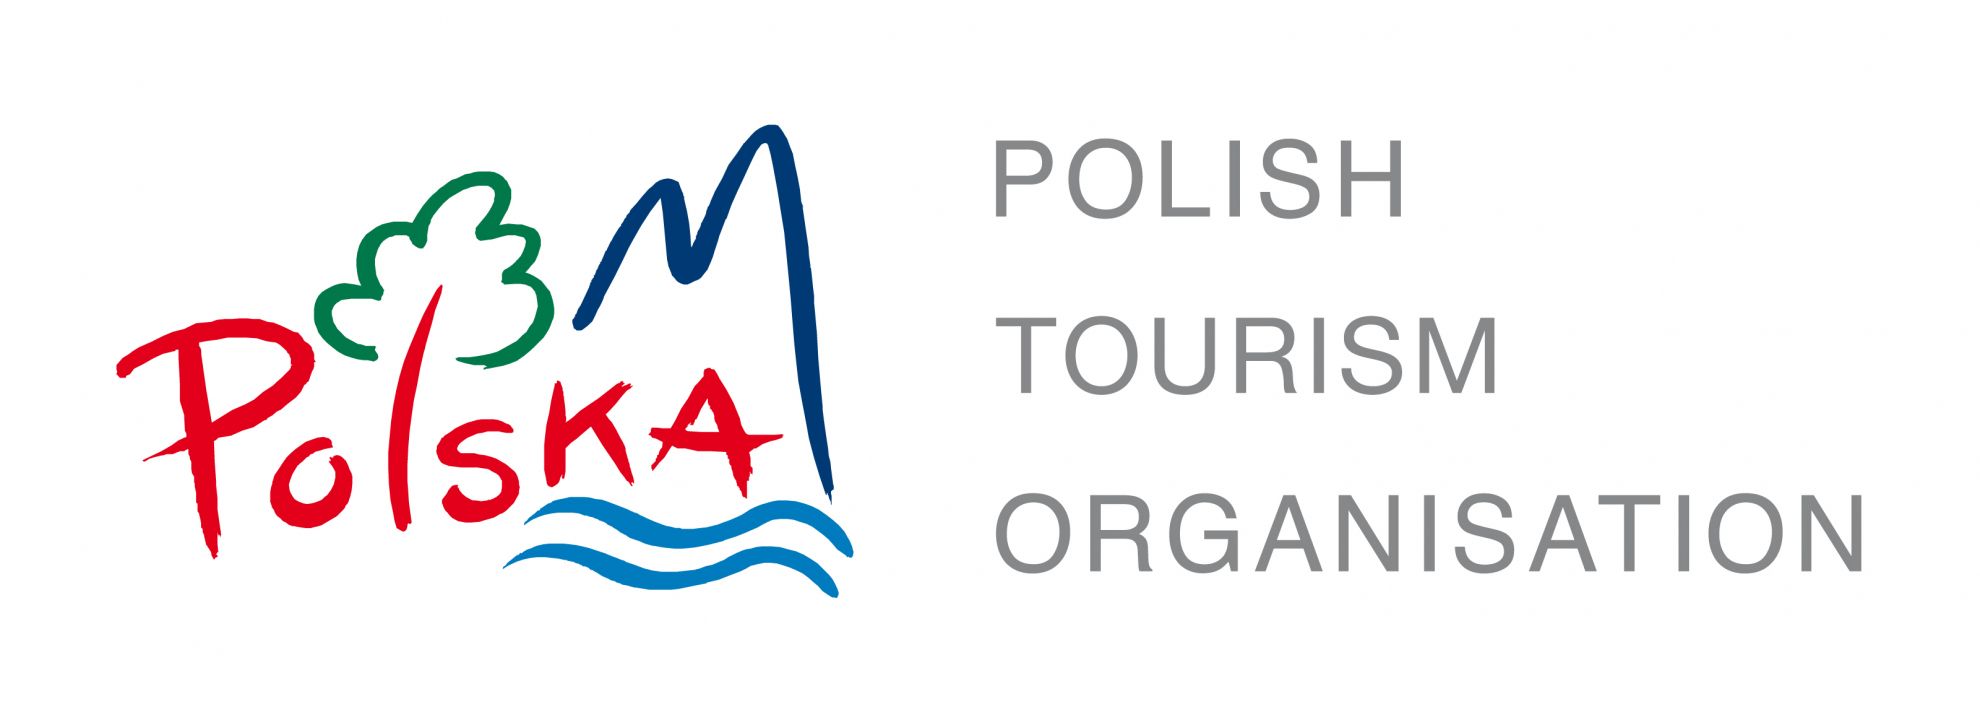 Polish Tourism Organisation Logo